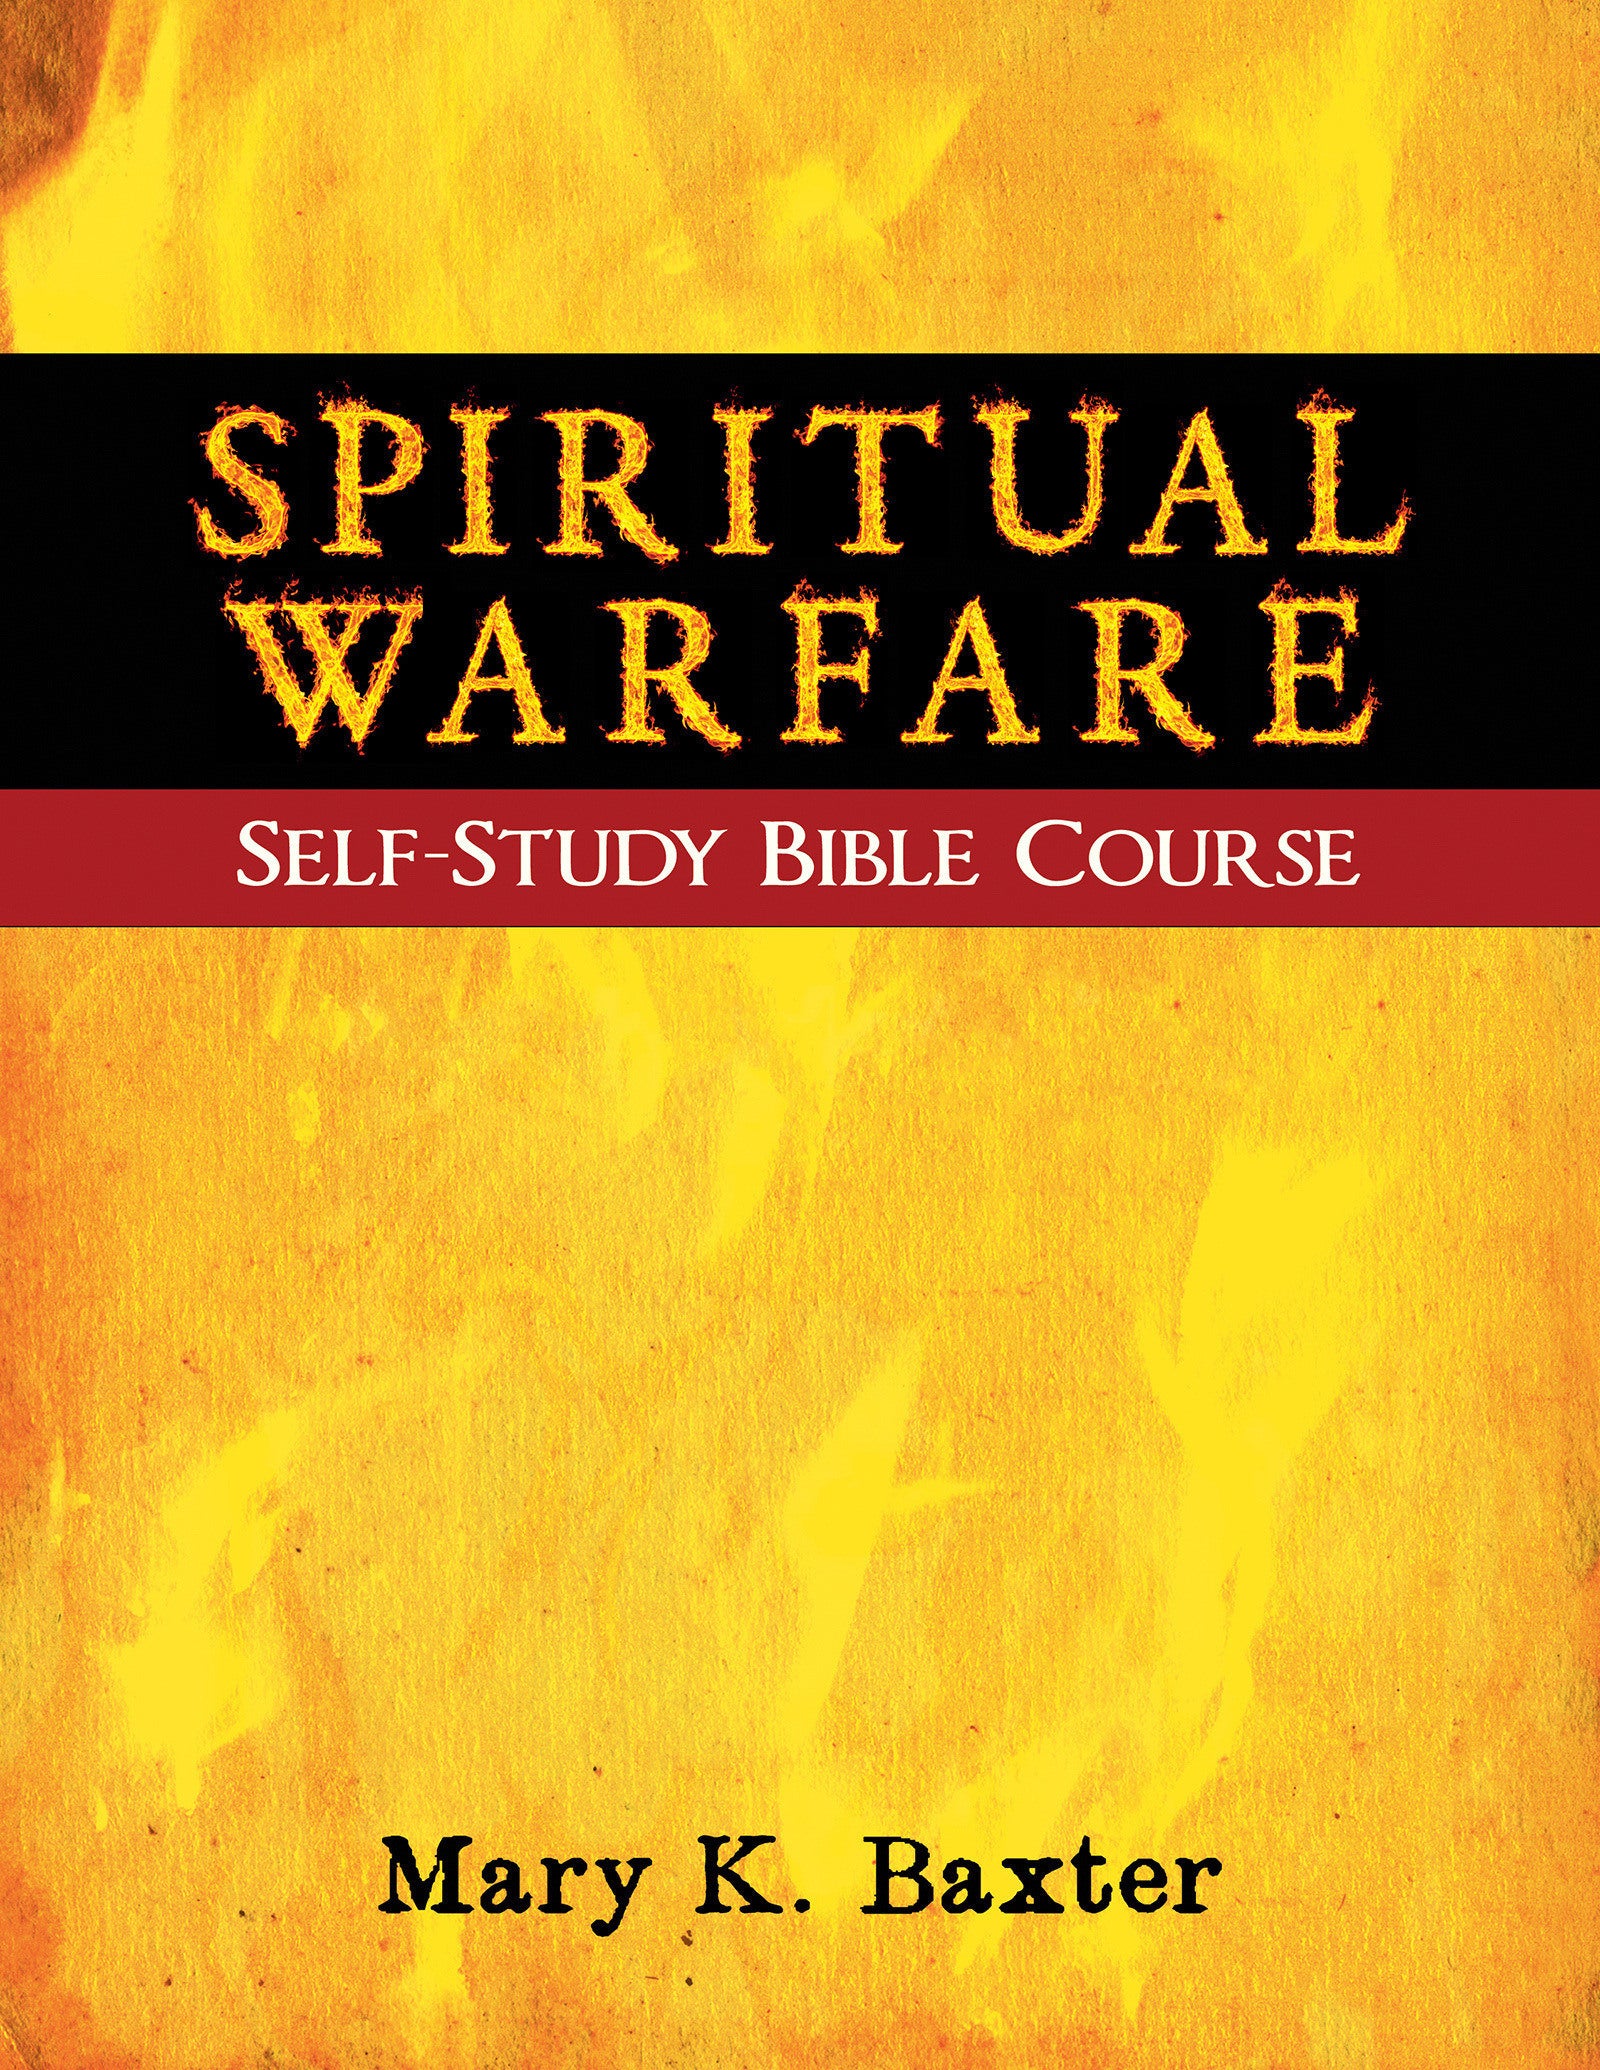 Image of Spiritual Warfare Self-Study Bible Course other